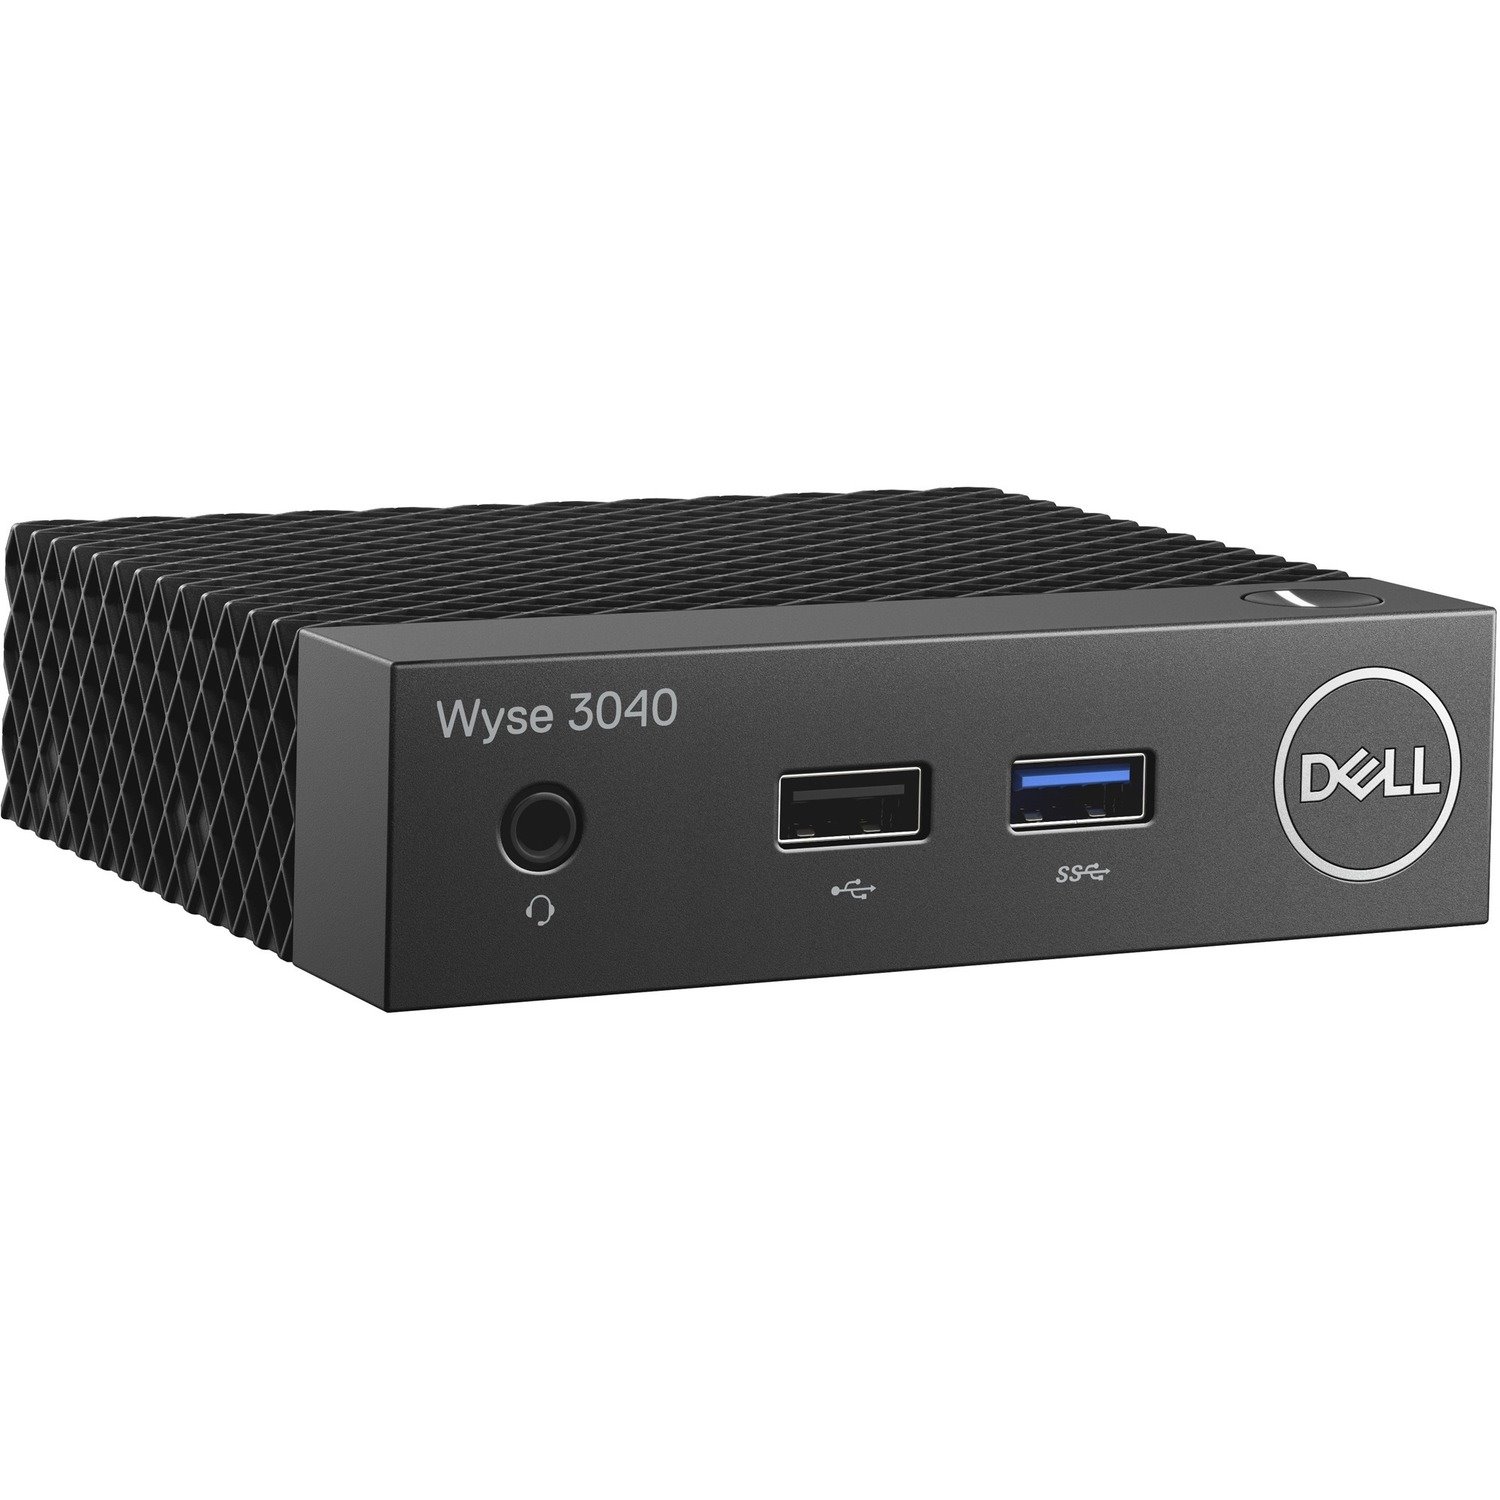 Wyse 3000 3040 Thin Client - Intel Atom x5-Z8350 Quad-core (4 Core) 1.44 GHz